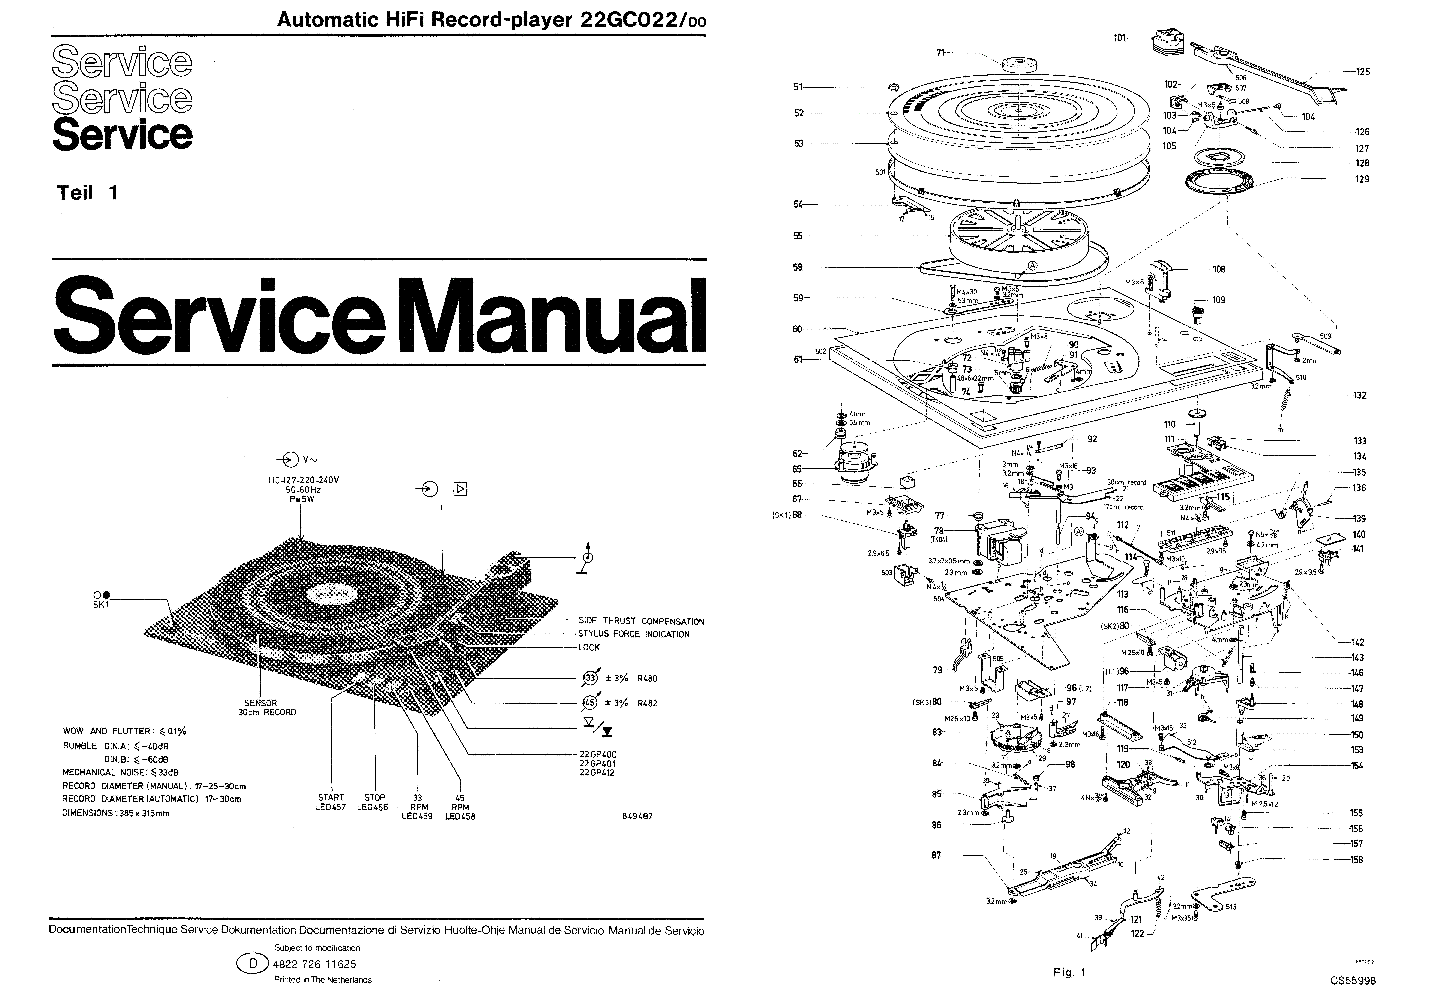 PHILIPS 22GA222 service manual (2nd page)